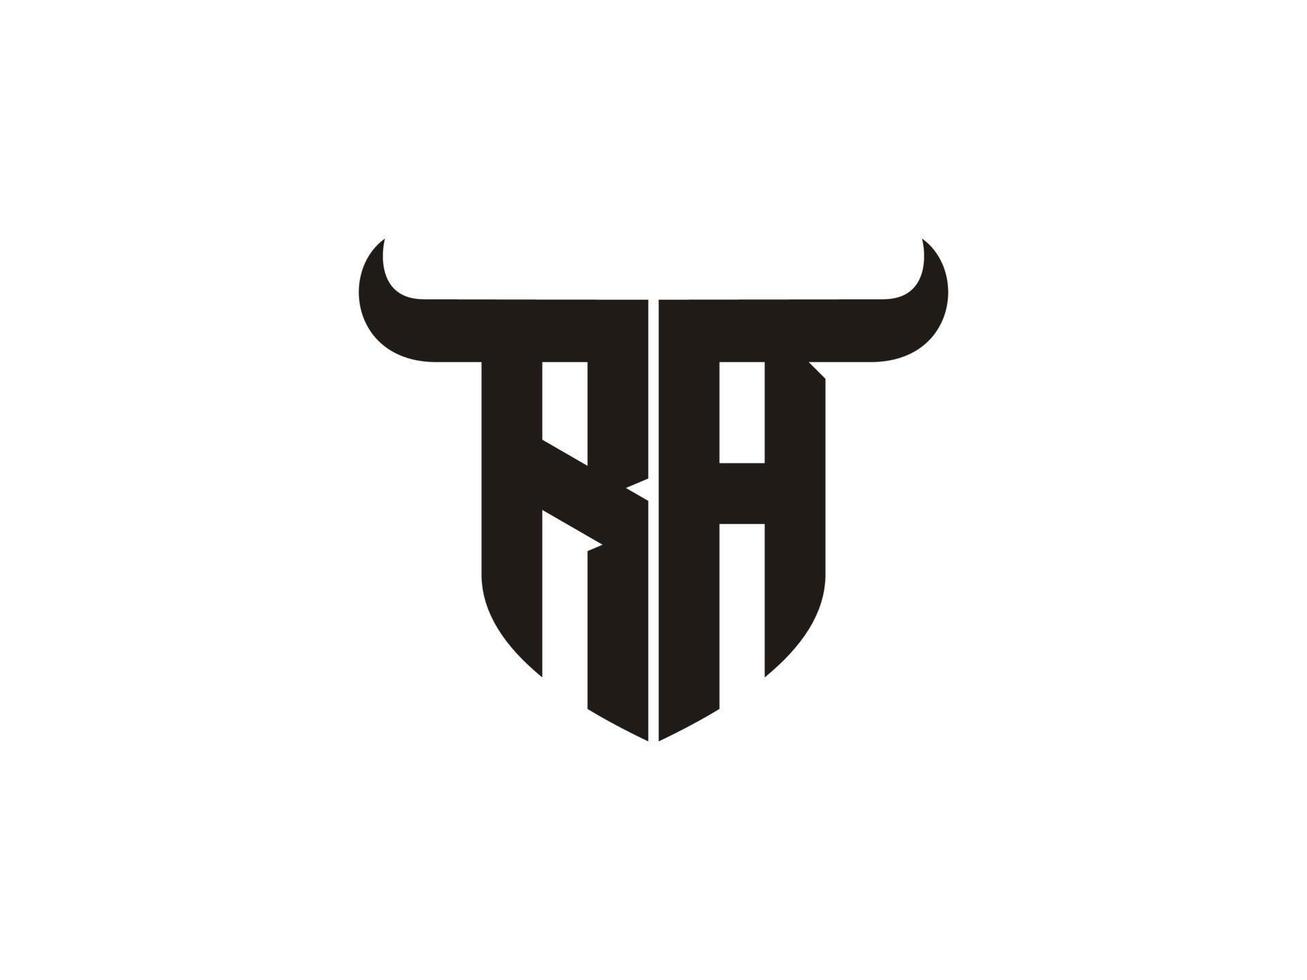 iniziale RA Toro logo design. vettore